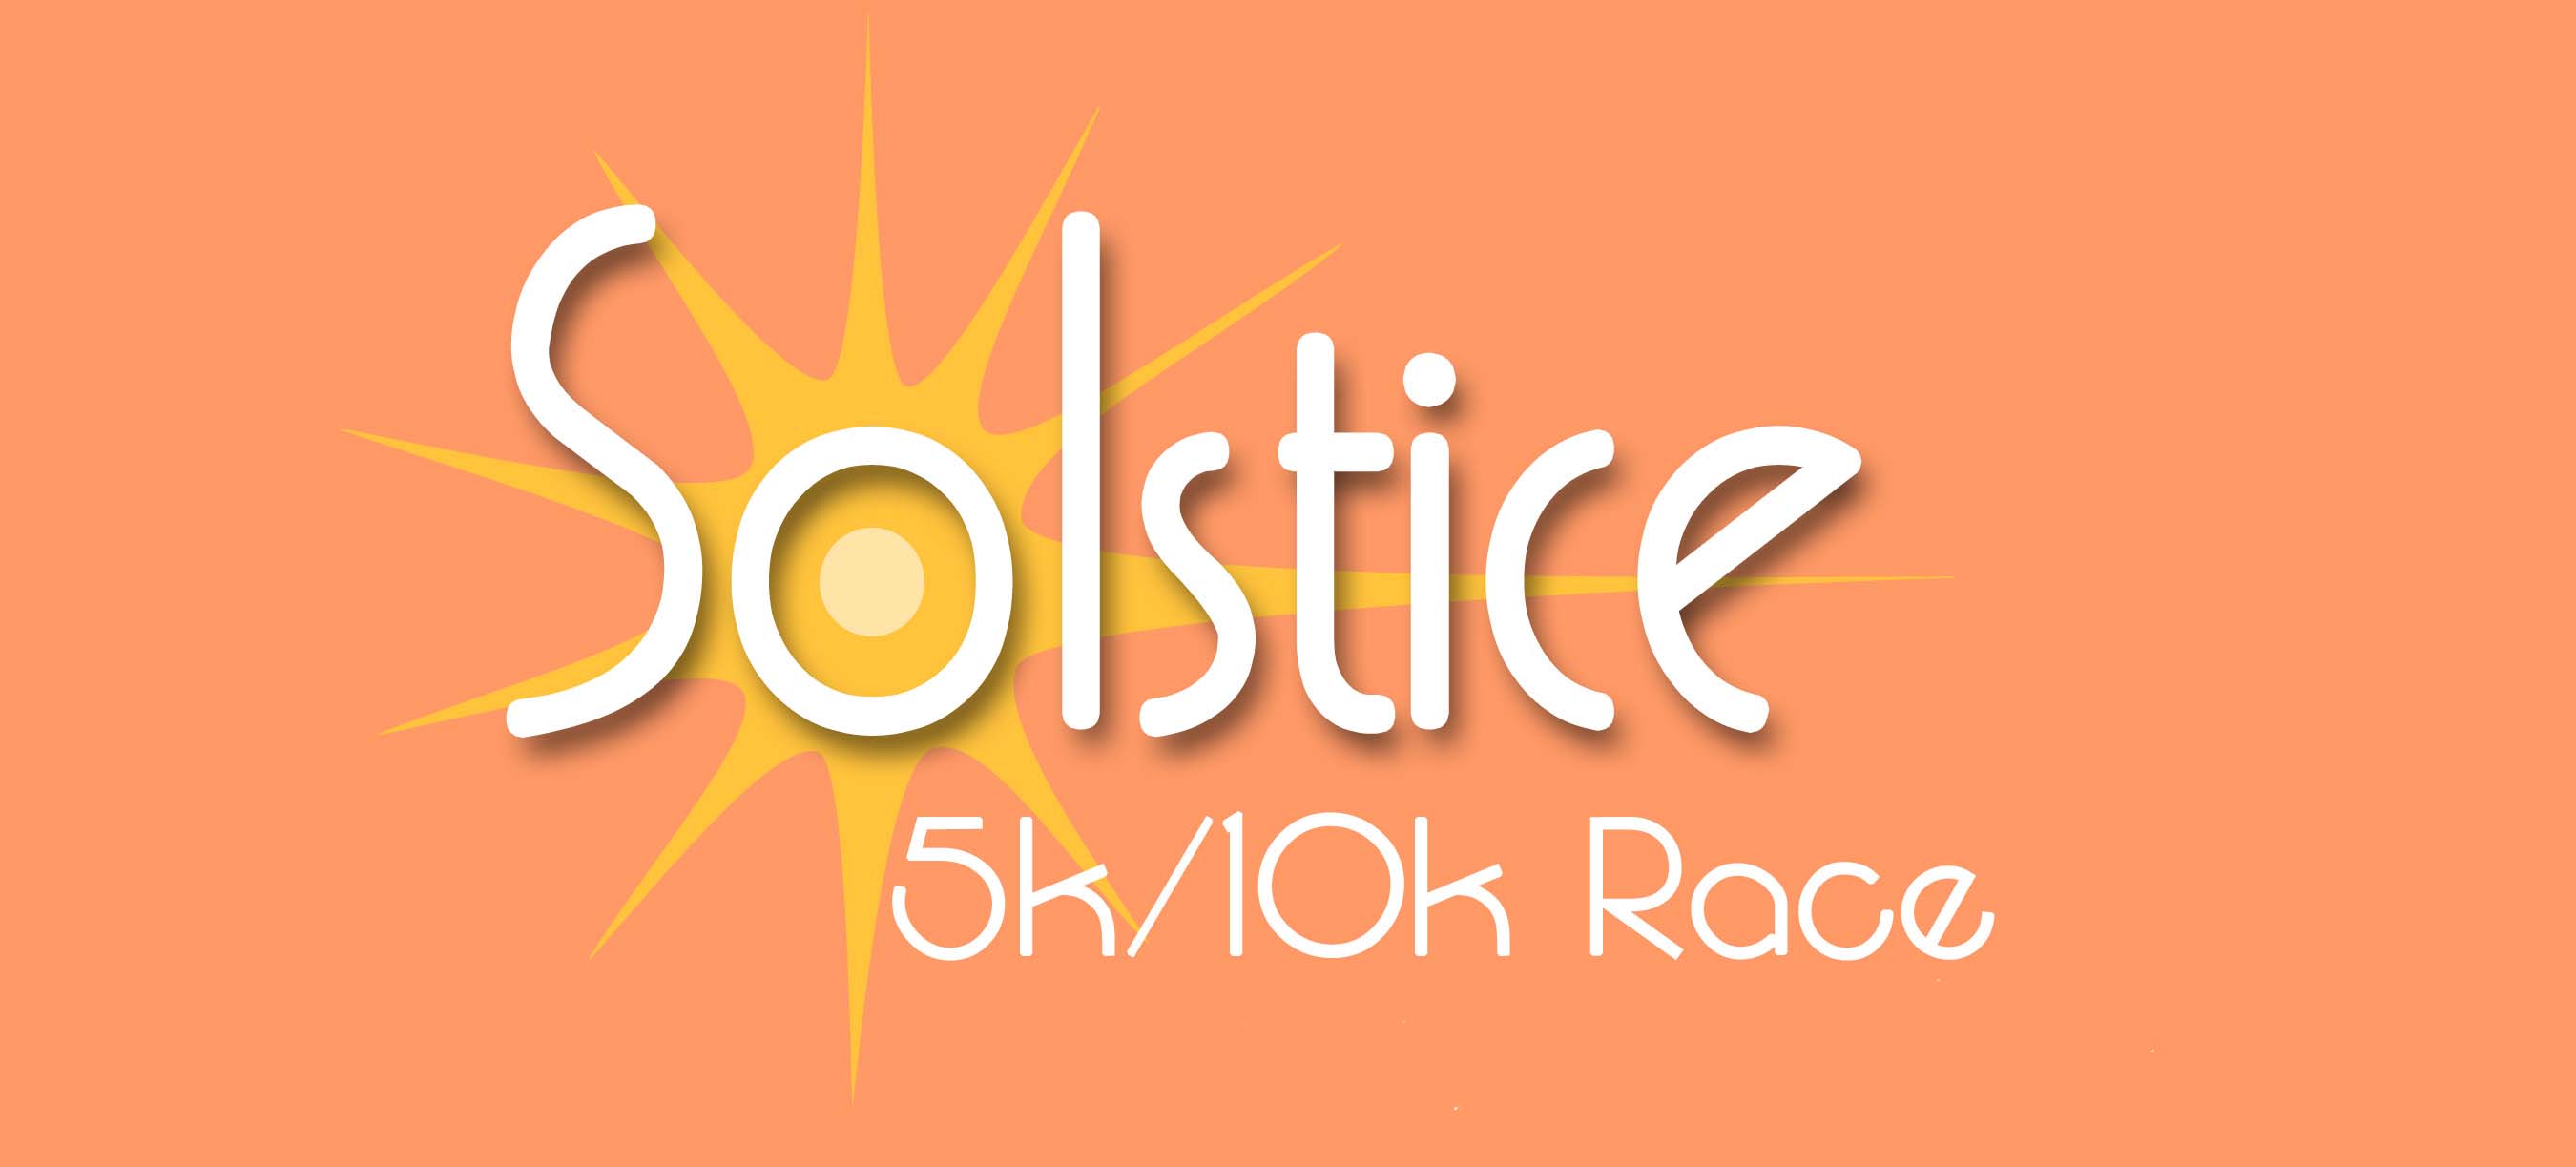 Register for 2018 Solstice Festival 1 Mile